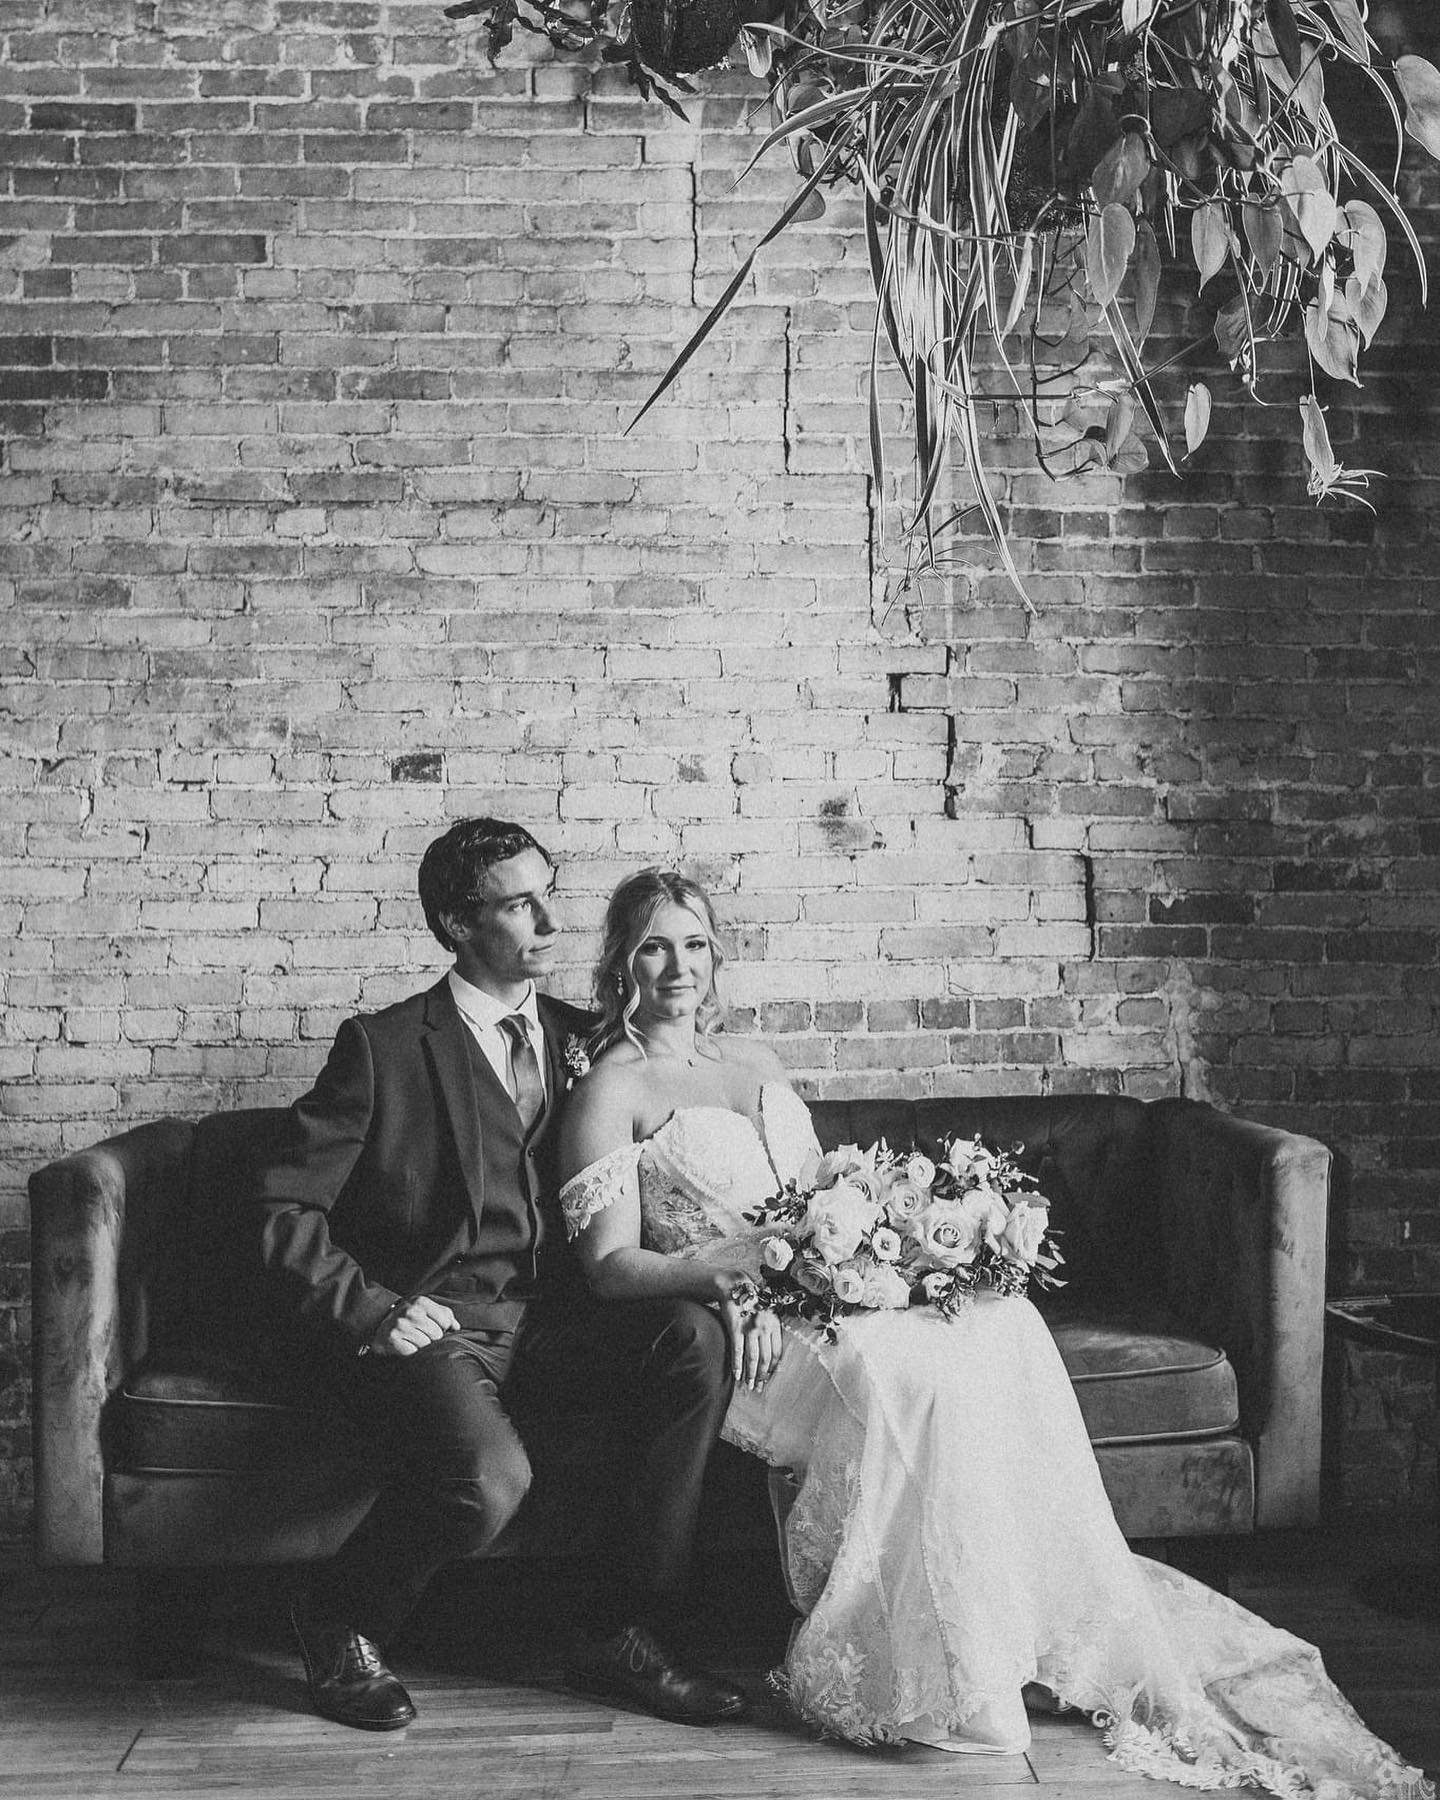 Another gorgeous May wedding at The Lageret 🧡 ☀️⁣
⁣
📸 @sarahmonsonphotography⁣
Floral: @florabyjamae⁣
Venue: @thelageret⁣
⁣
.⁣
.⁣
.⁣
.⁣
.⁣
.⁣
.⁣
#thelageret #weddinginspo #florabyjamae #historicvenue #warehousewedding #industrialwedding #rusticwedd